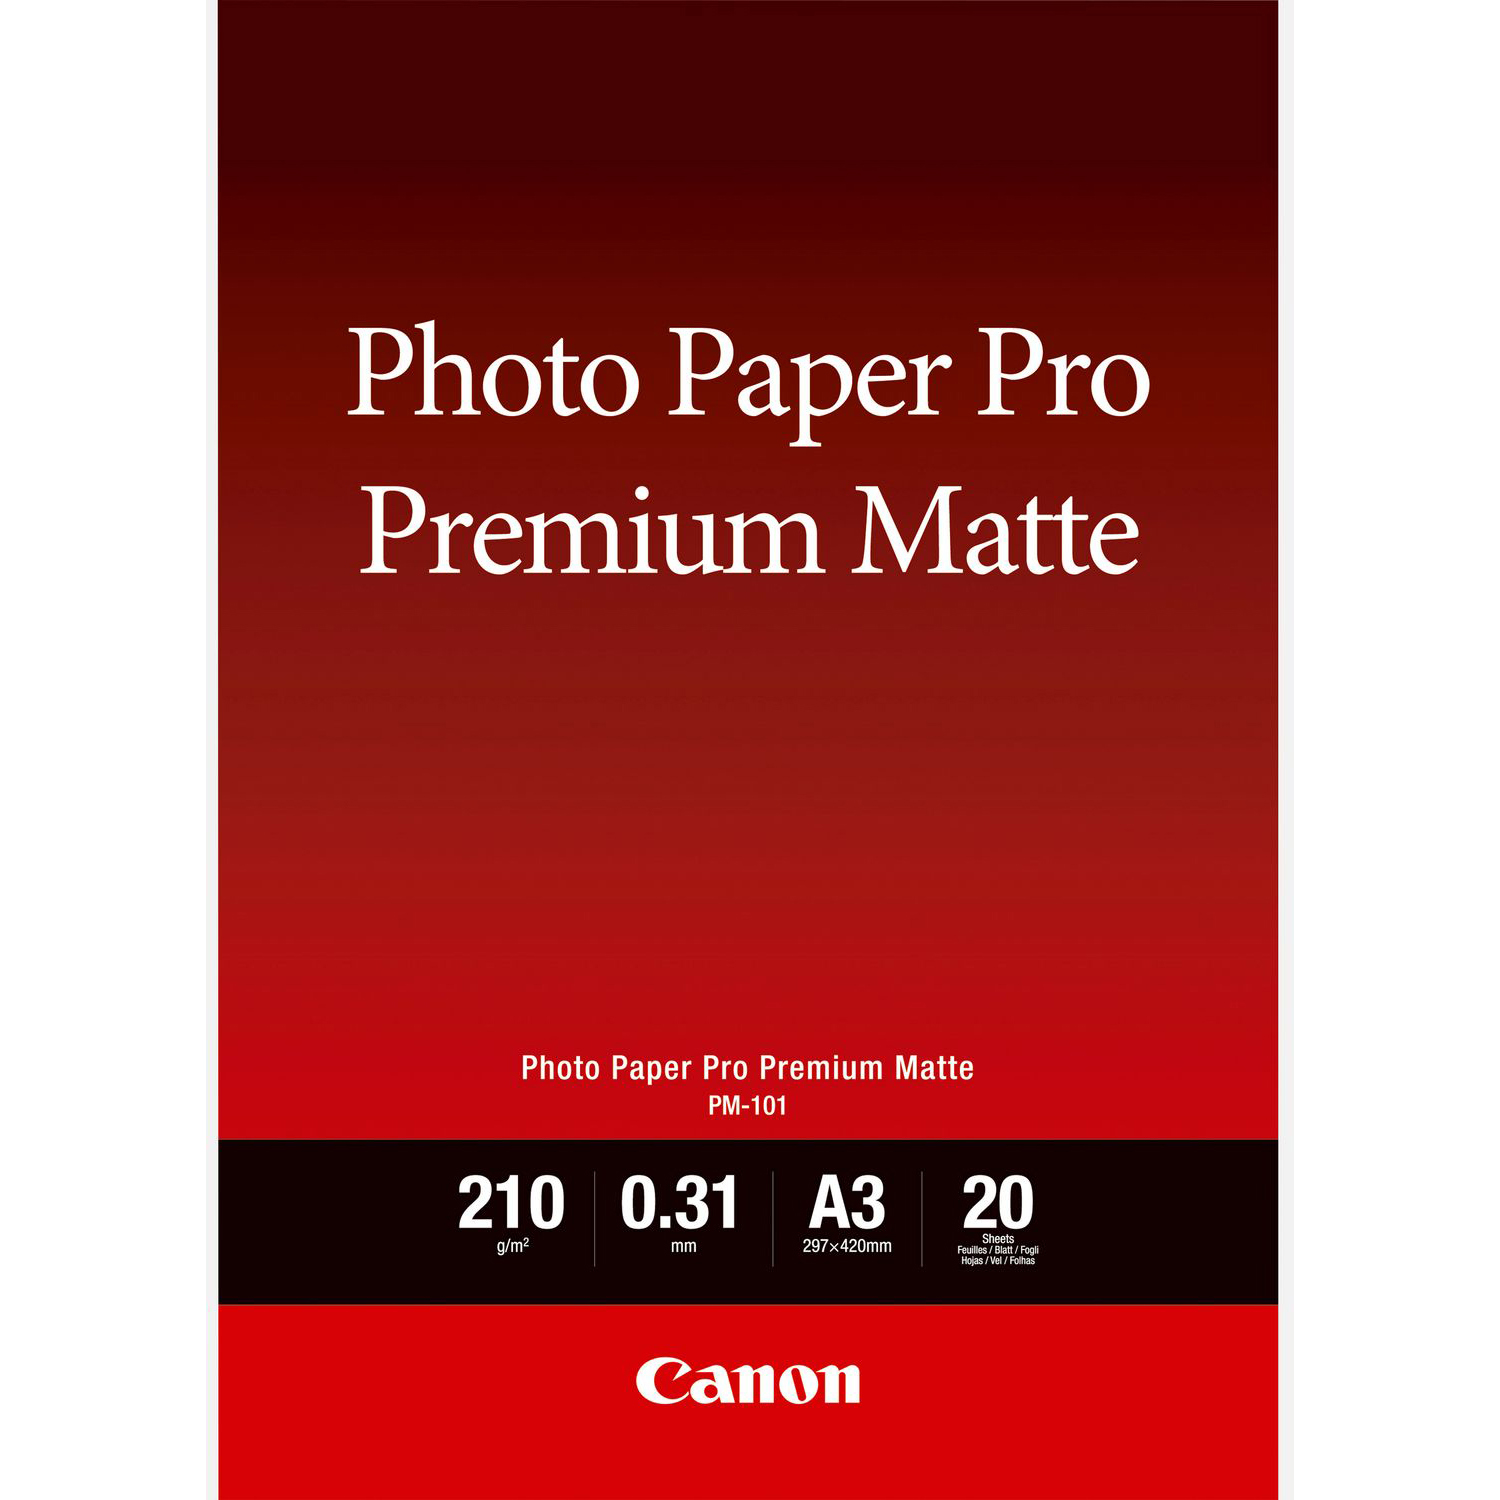 Original Canon PM-101 210gsm A3 Photo Paper - 20 Sheets (8657B006)